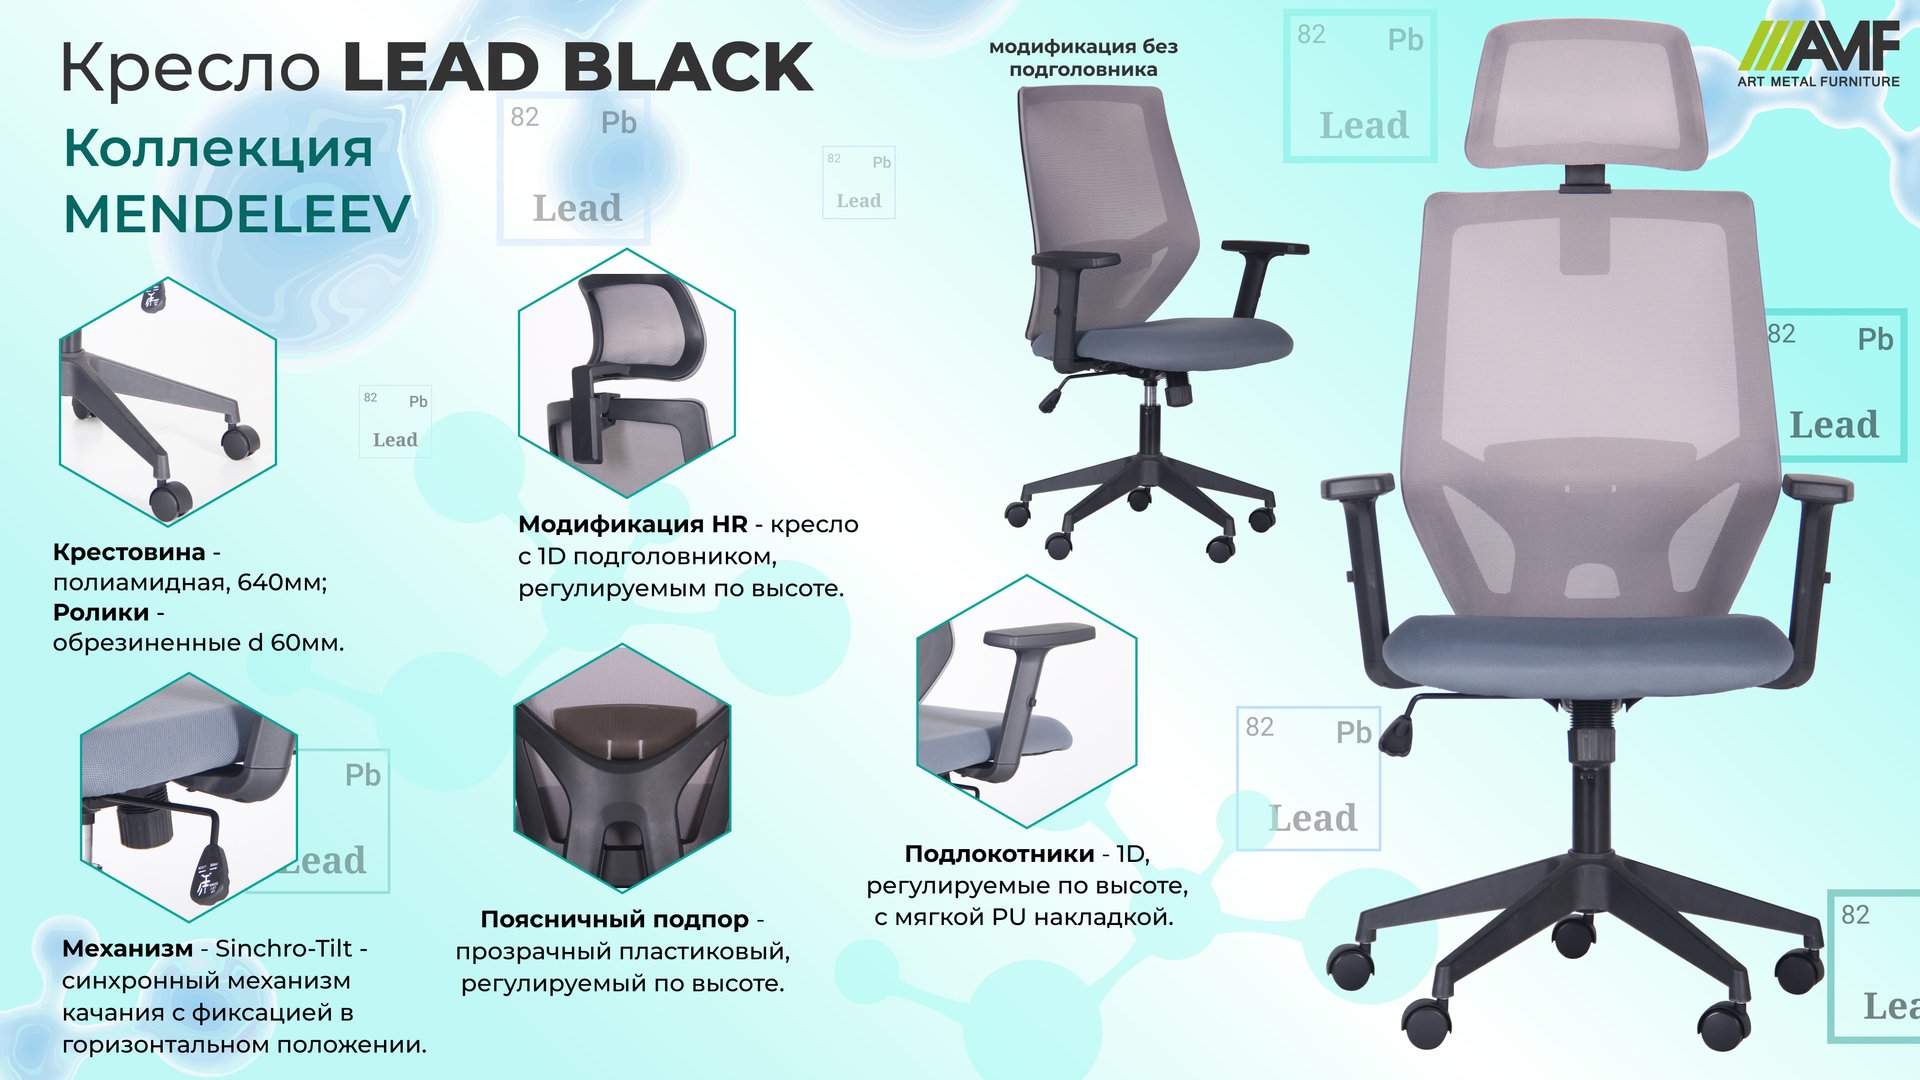 Кресло Lead Black описание